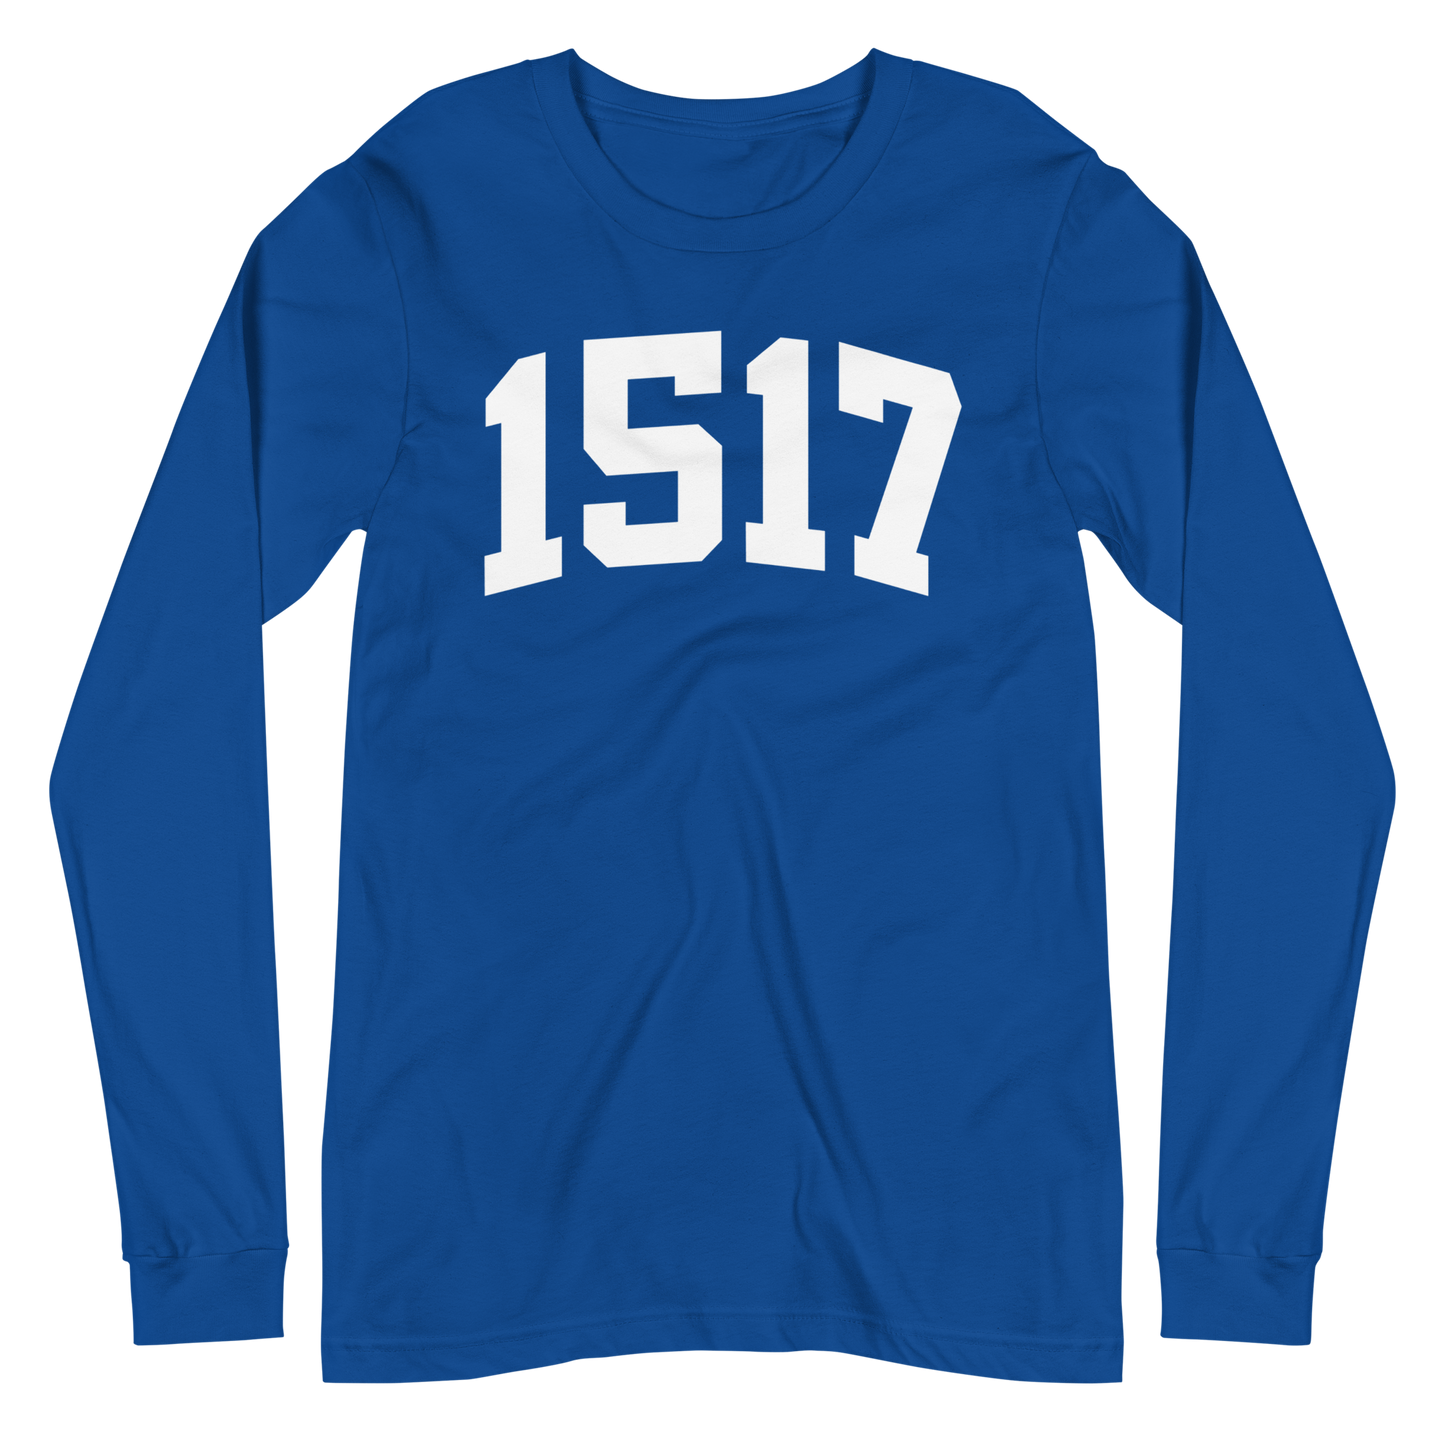 1517 Long Sleeve Shirt